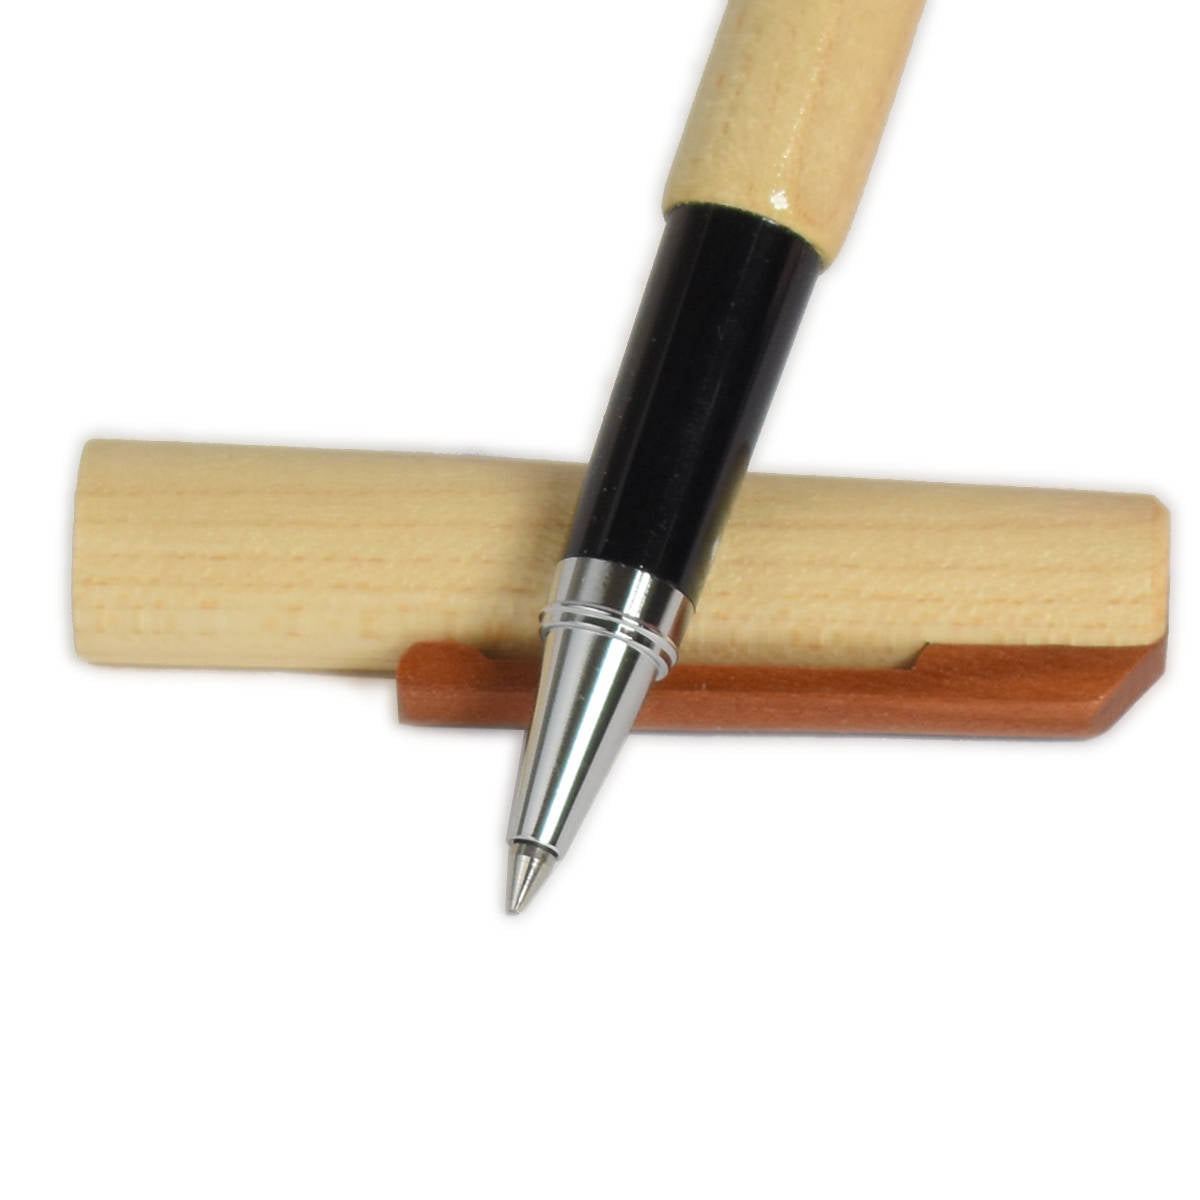 Tintenroller aus edlem Holz  'Ball Pen' | verchromte Spitze | wechslbare Mine | in verschiedenen Holzarten | Made in Germany